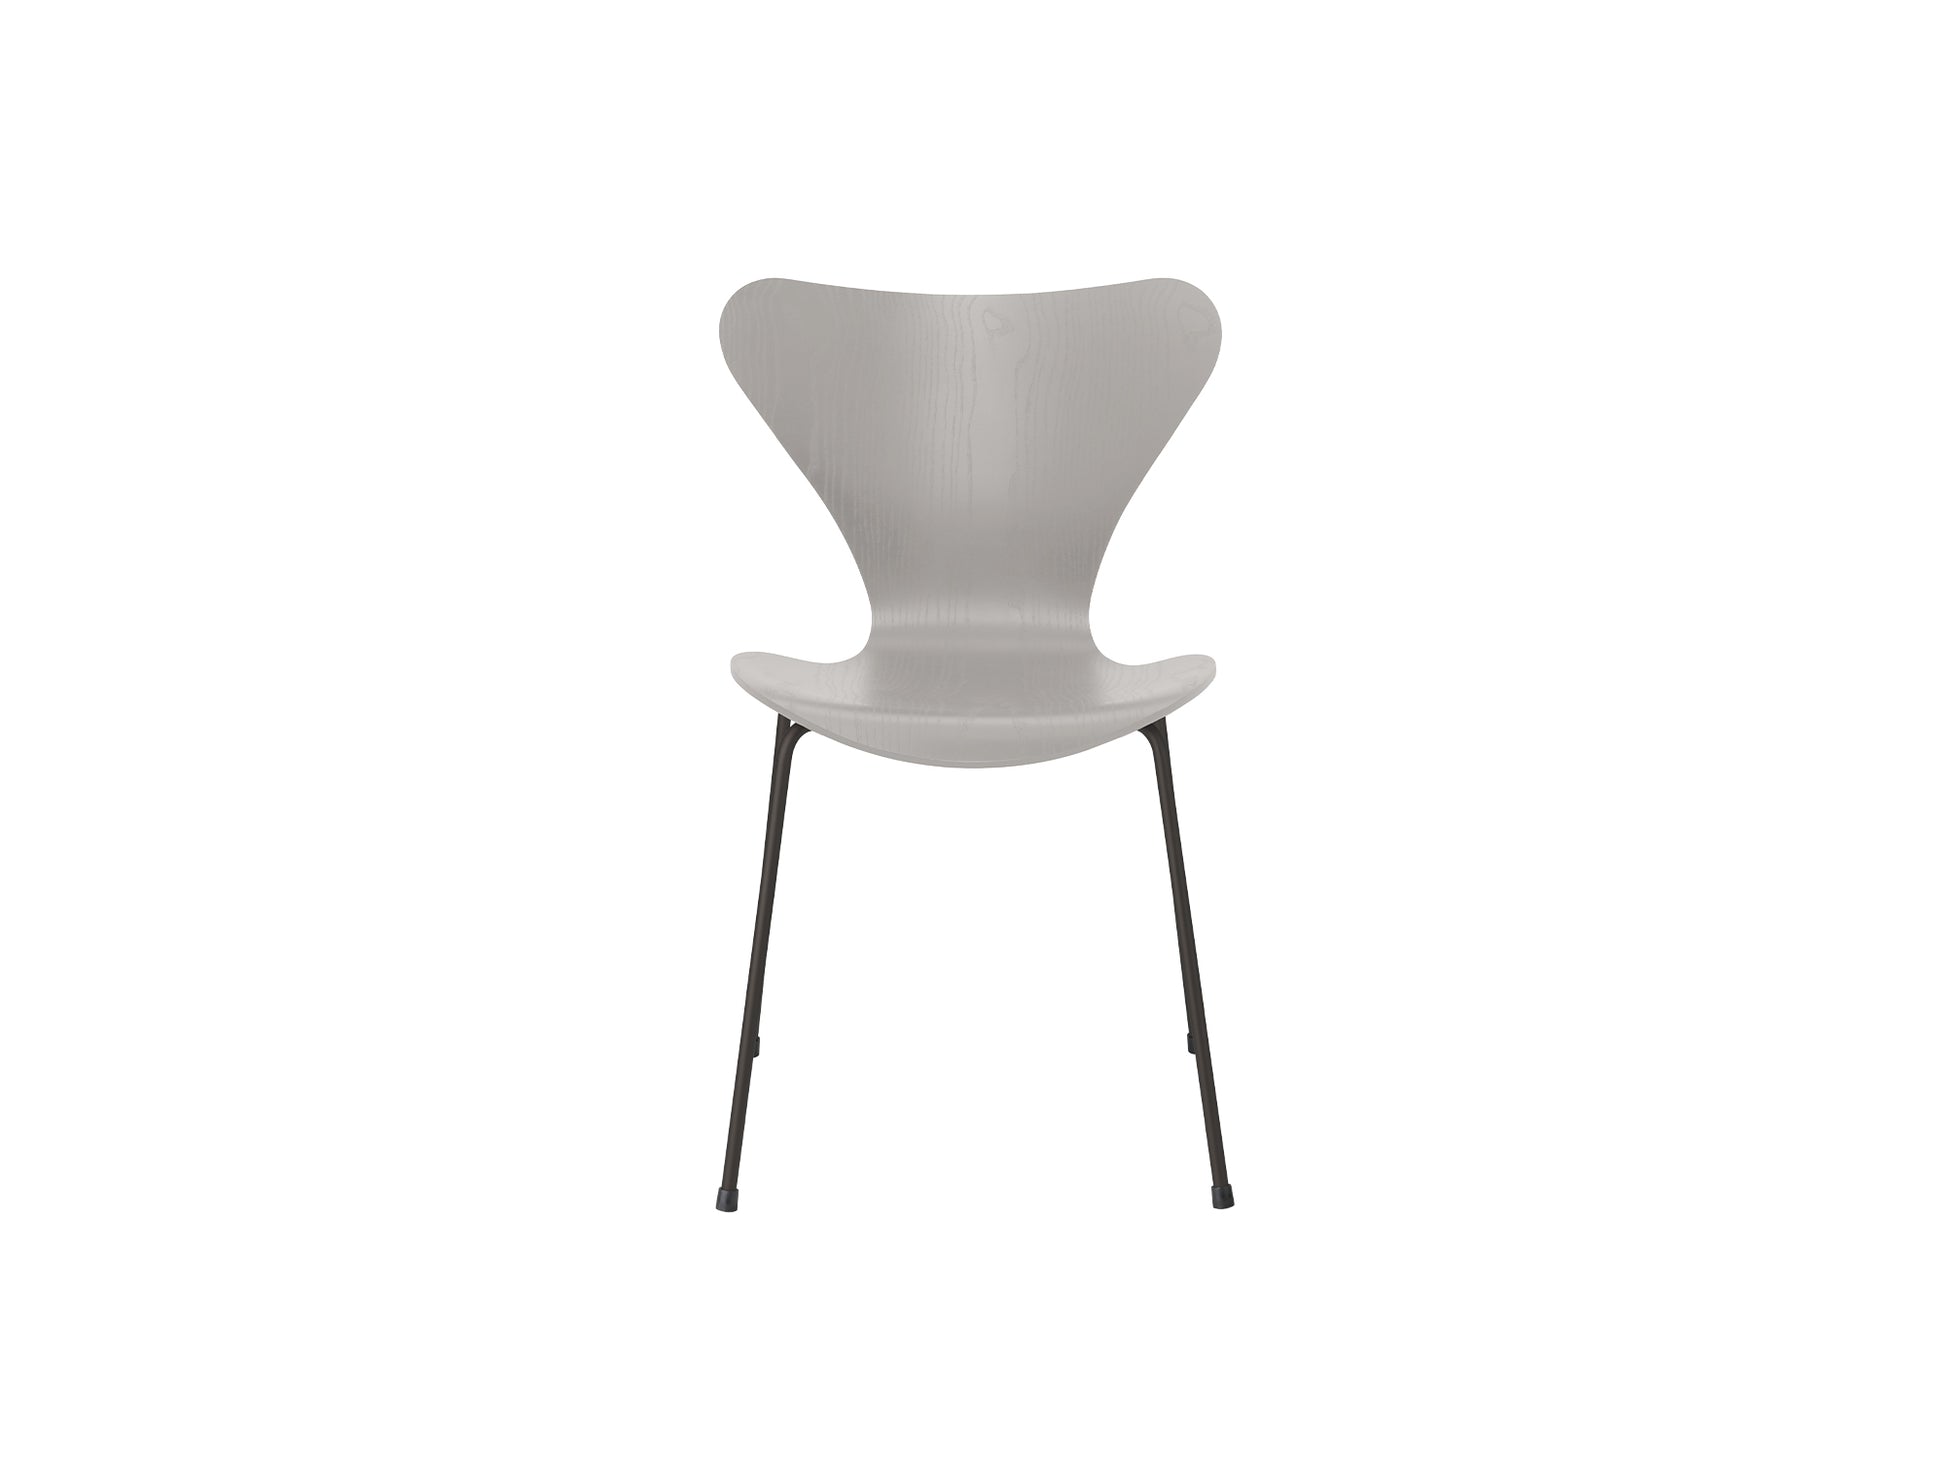 Series 7™ 3107 Dining Chair by Fritz Hansen - Nine Grey Coloured Ash Veneer Shell / Warm Graphite Steel